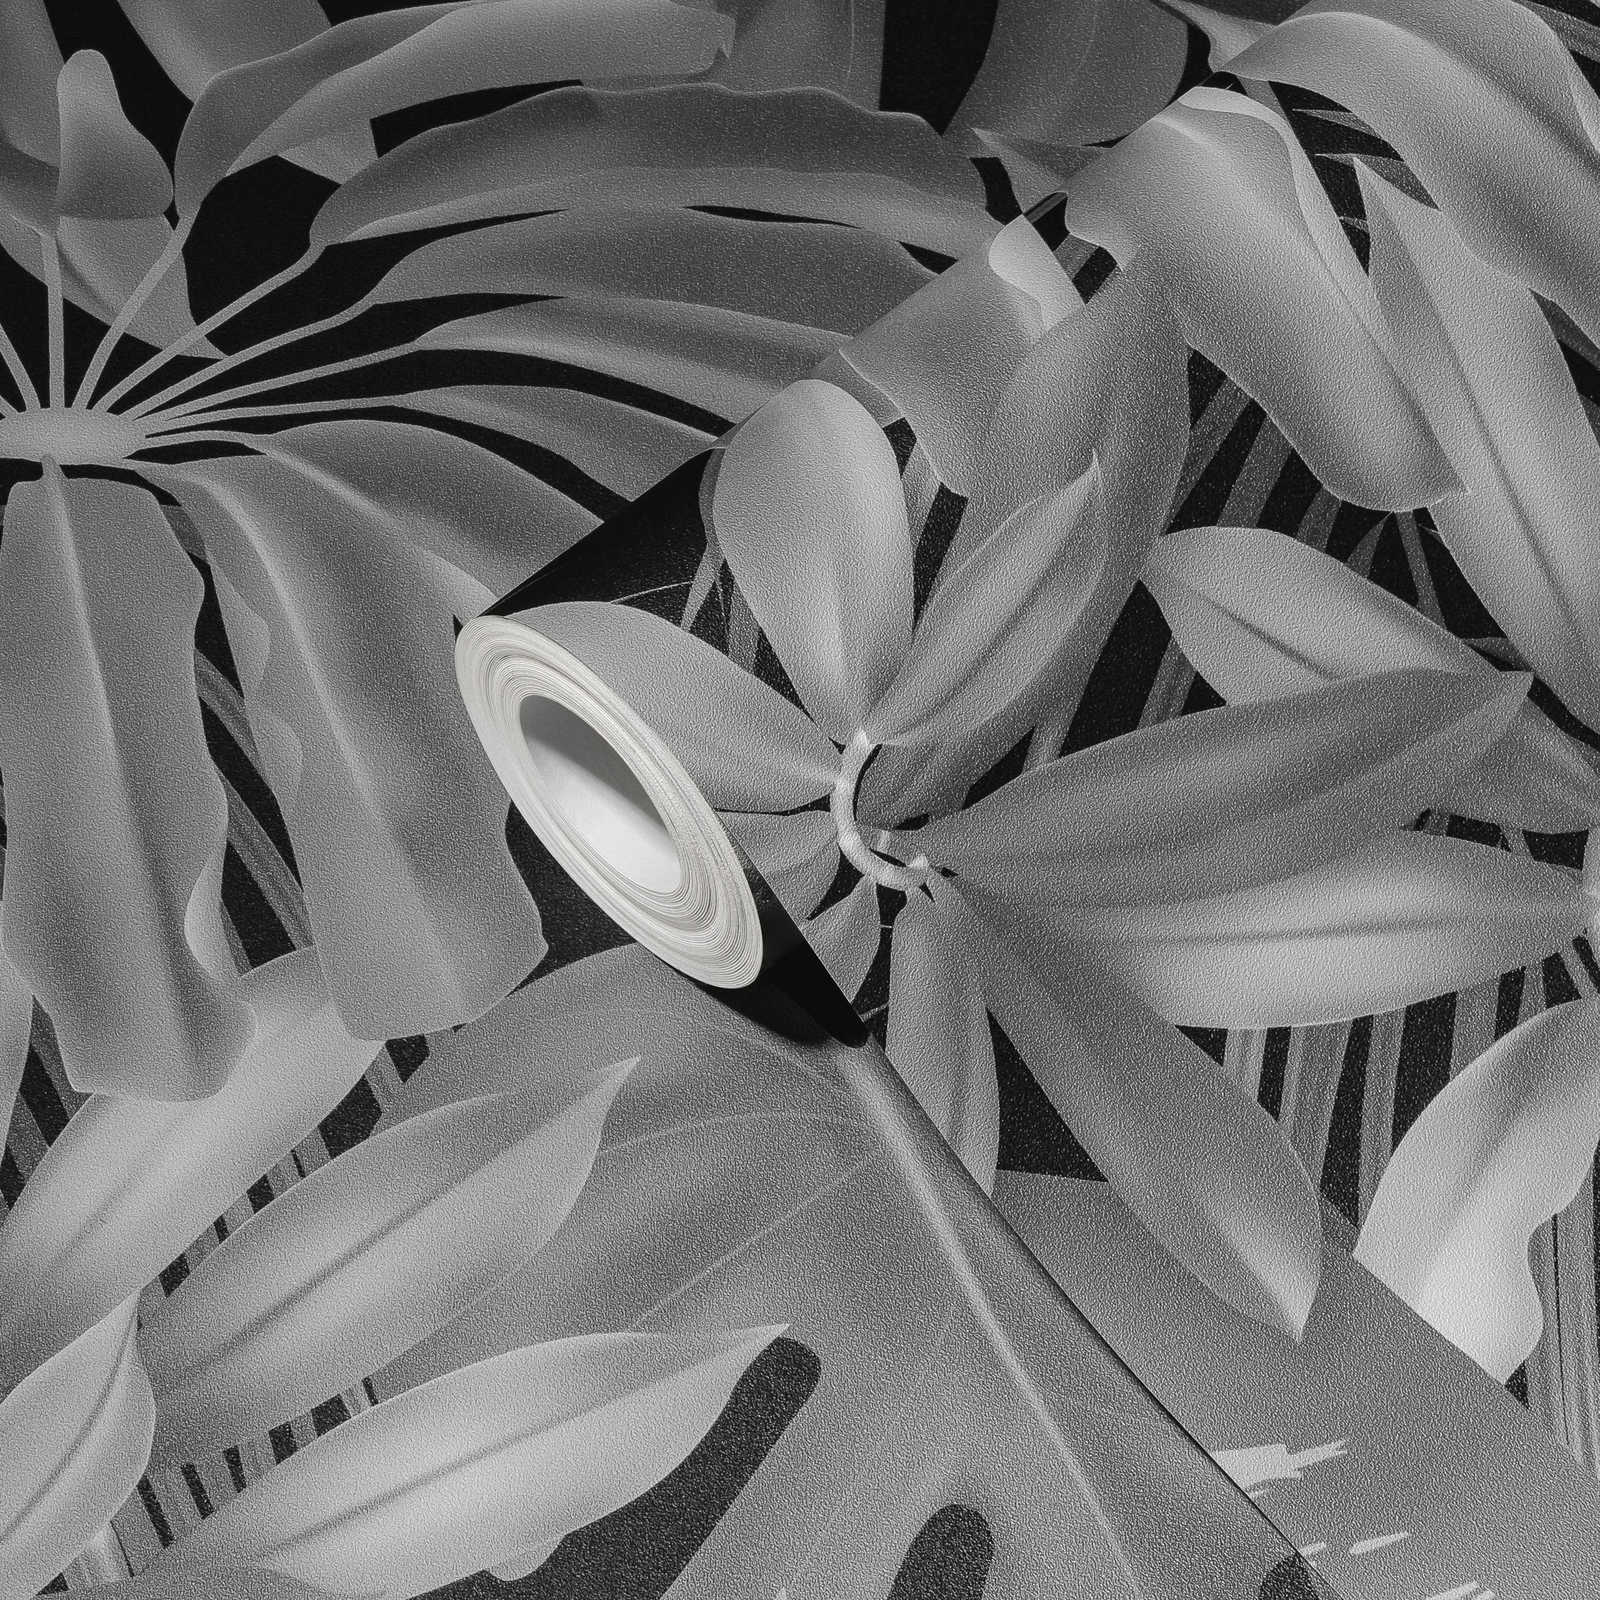             Leaves wallpaper jungle pattern - grey, black
        